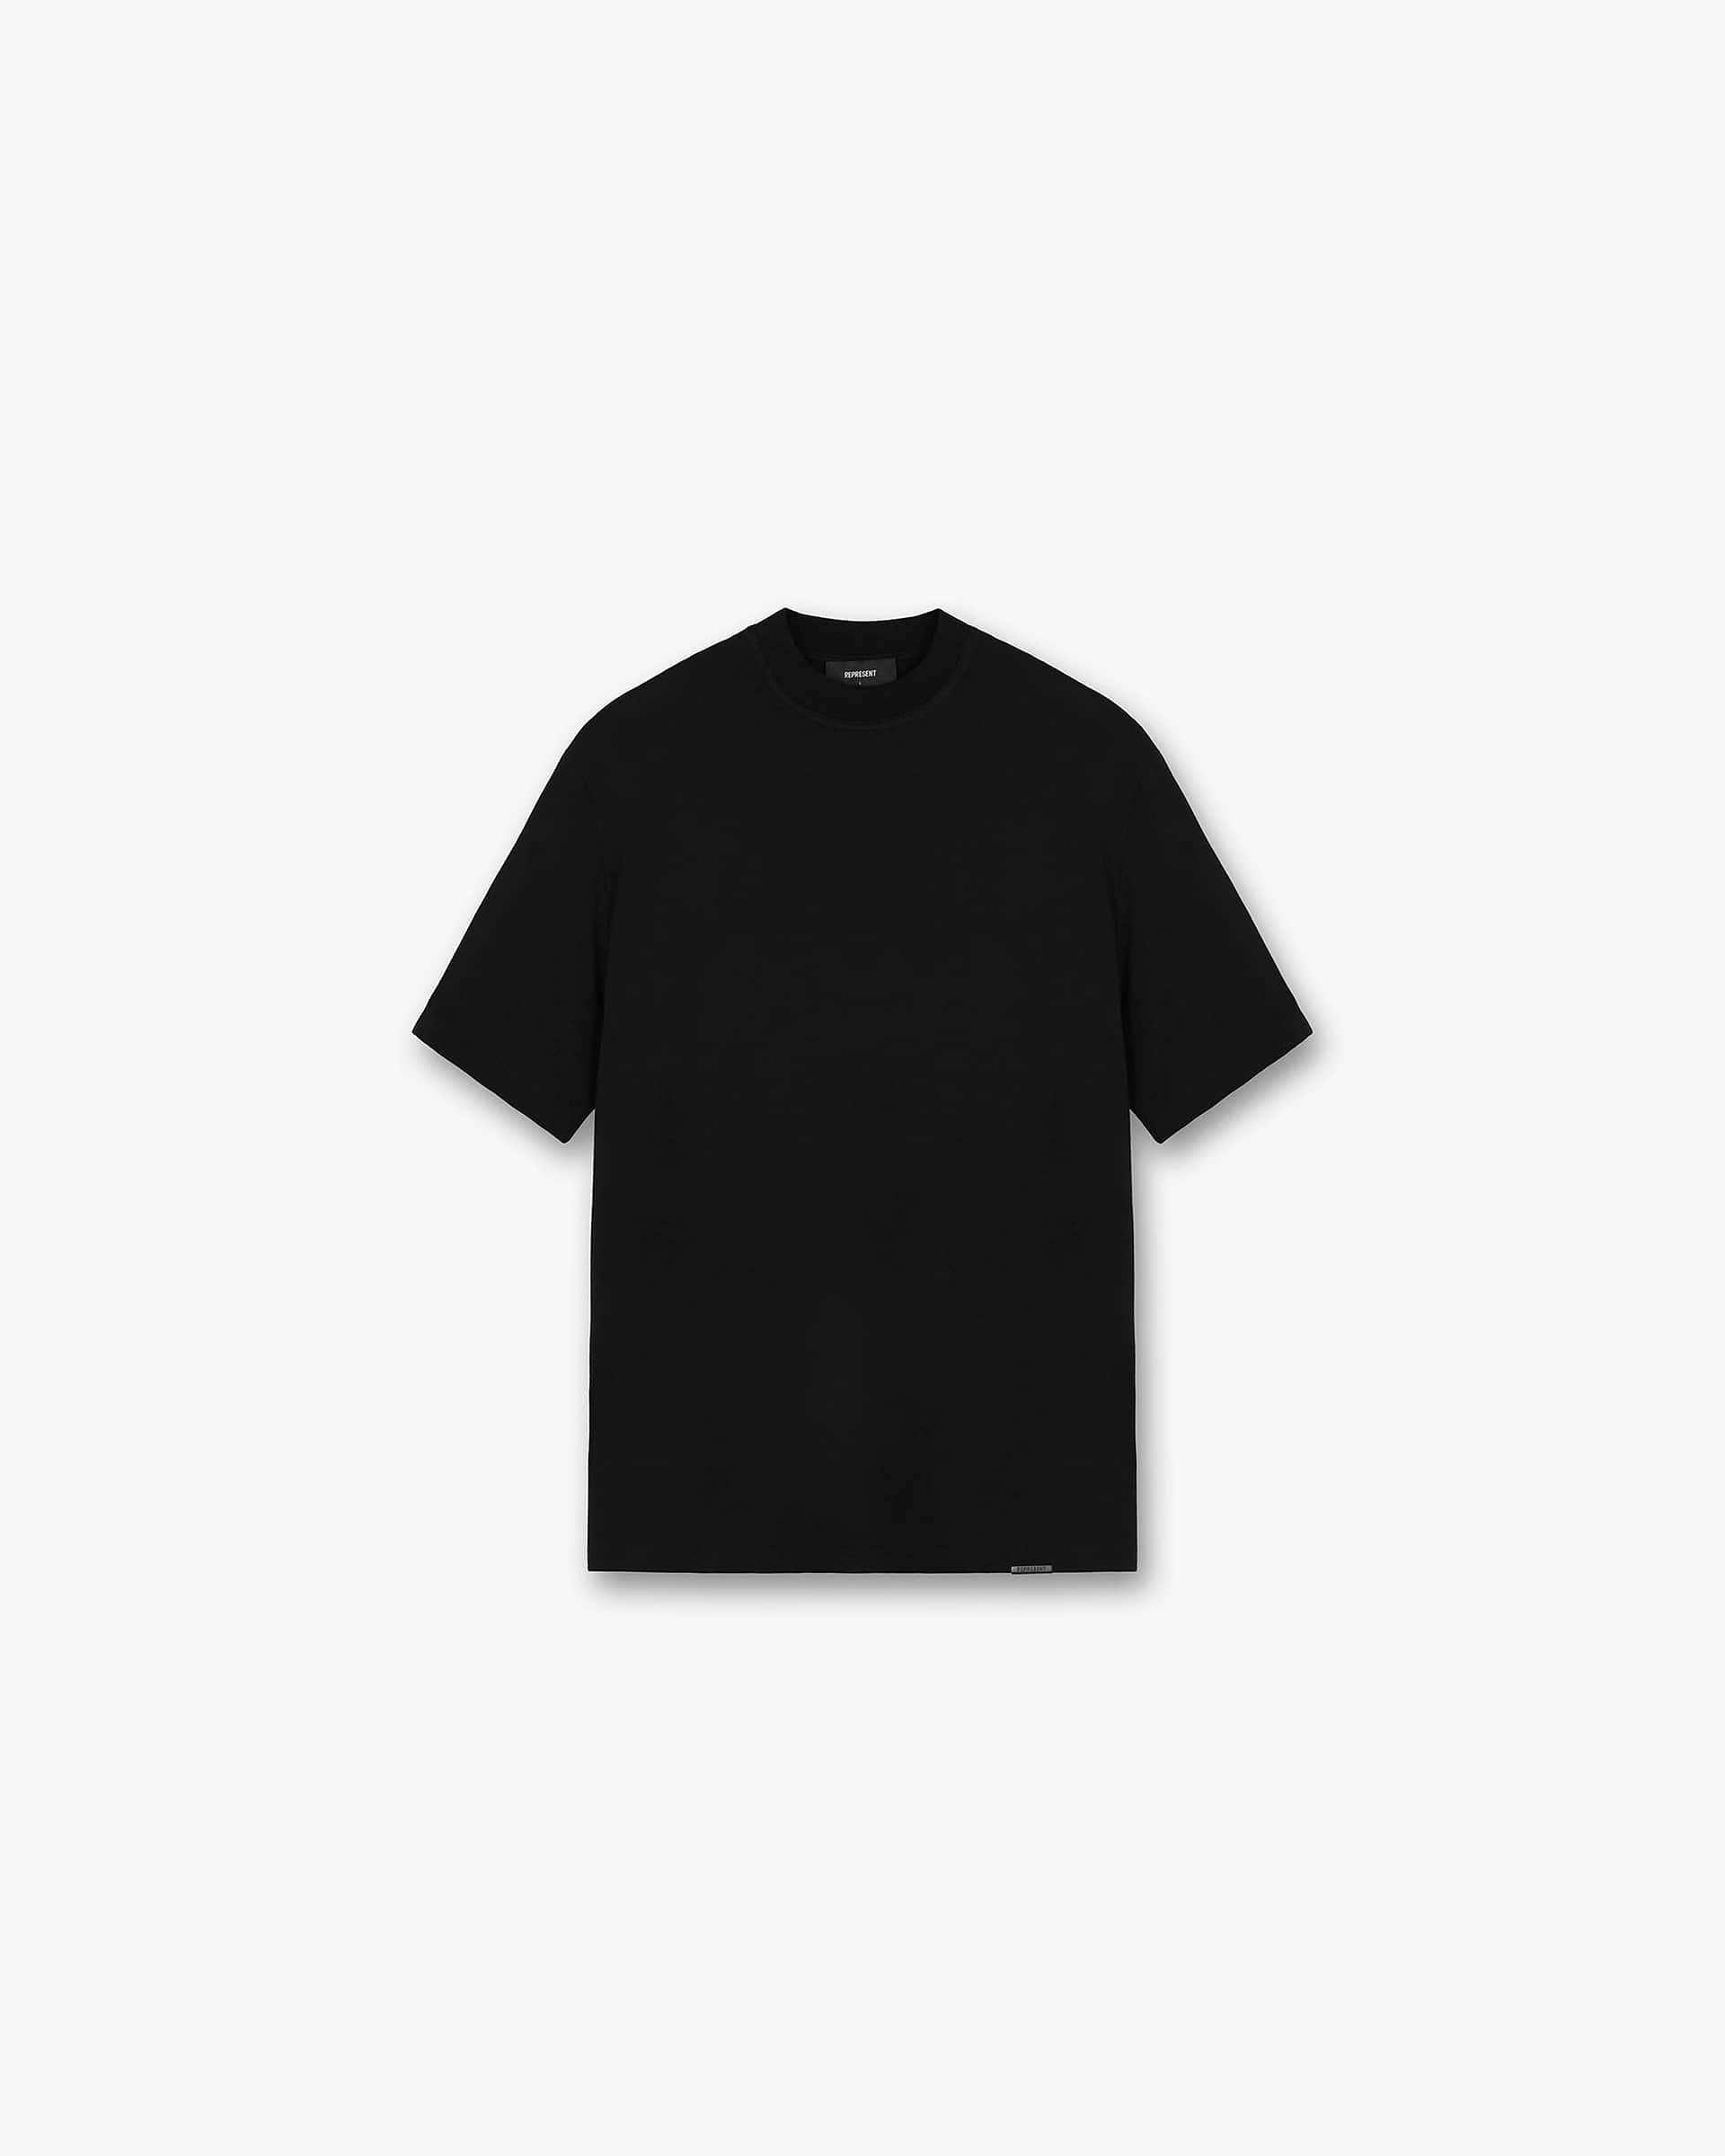 The Core T-Shirt | Jet Black | Represent Clo